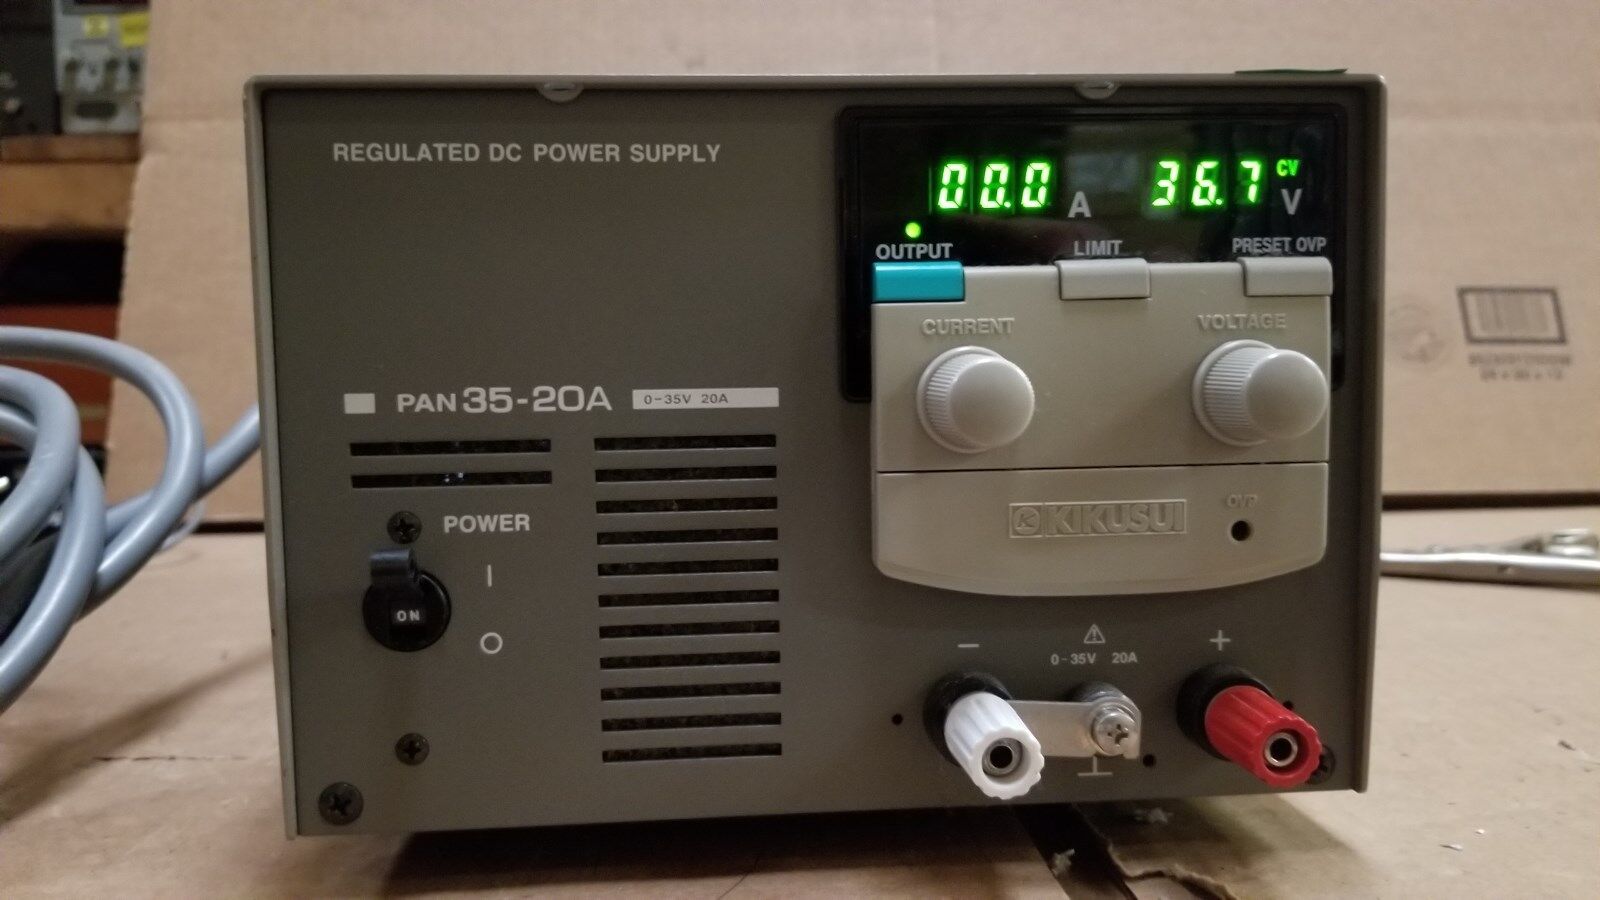 Kikusui PAN35-20A Regulated DC Power Supply 0-35V/0-20A Tested Good #2